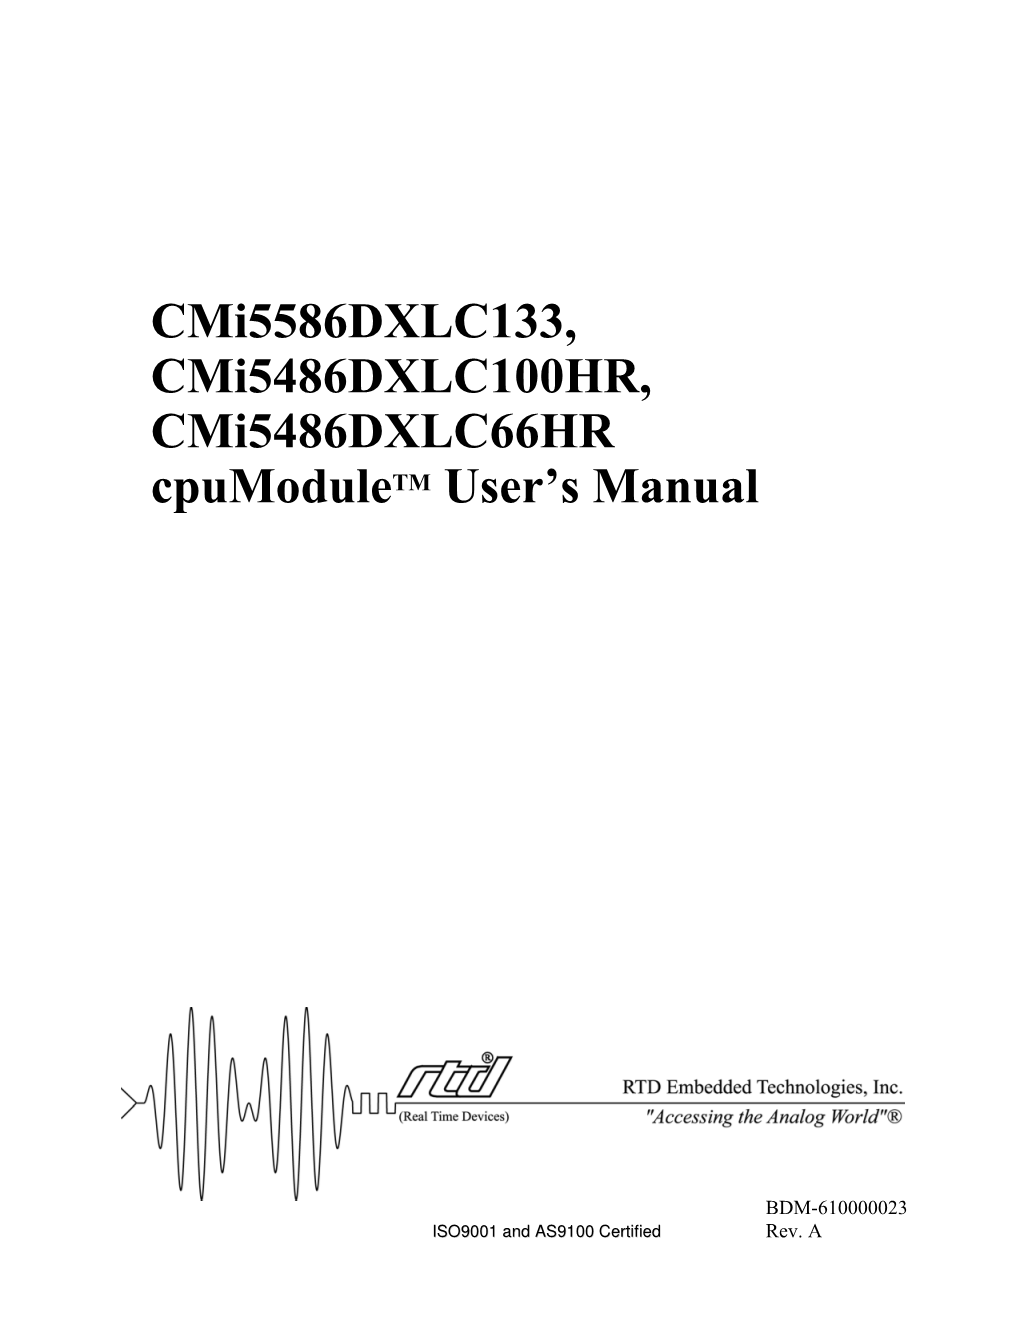 Cmi5586dxlc133, Cmi5486dxlc100hr, Cmi5486dxlc66hr Cpumoduletm User’S Manual